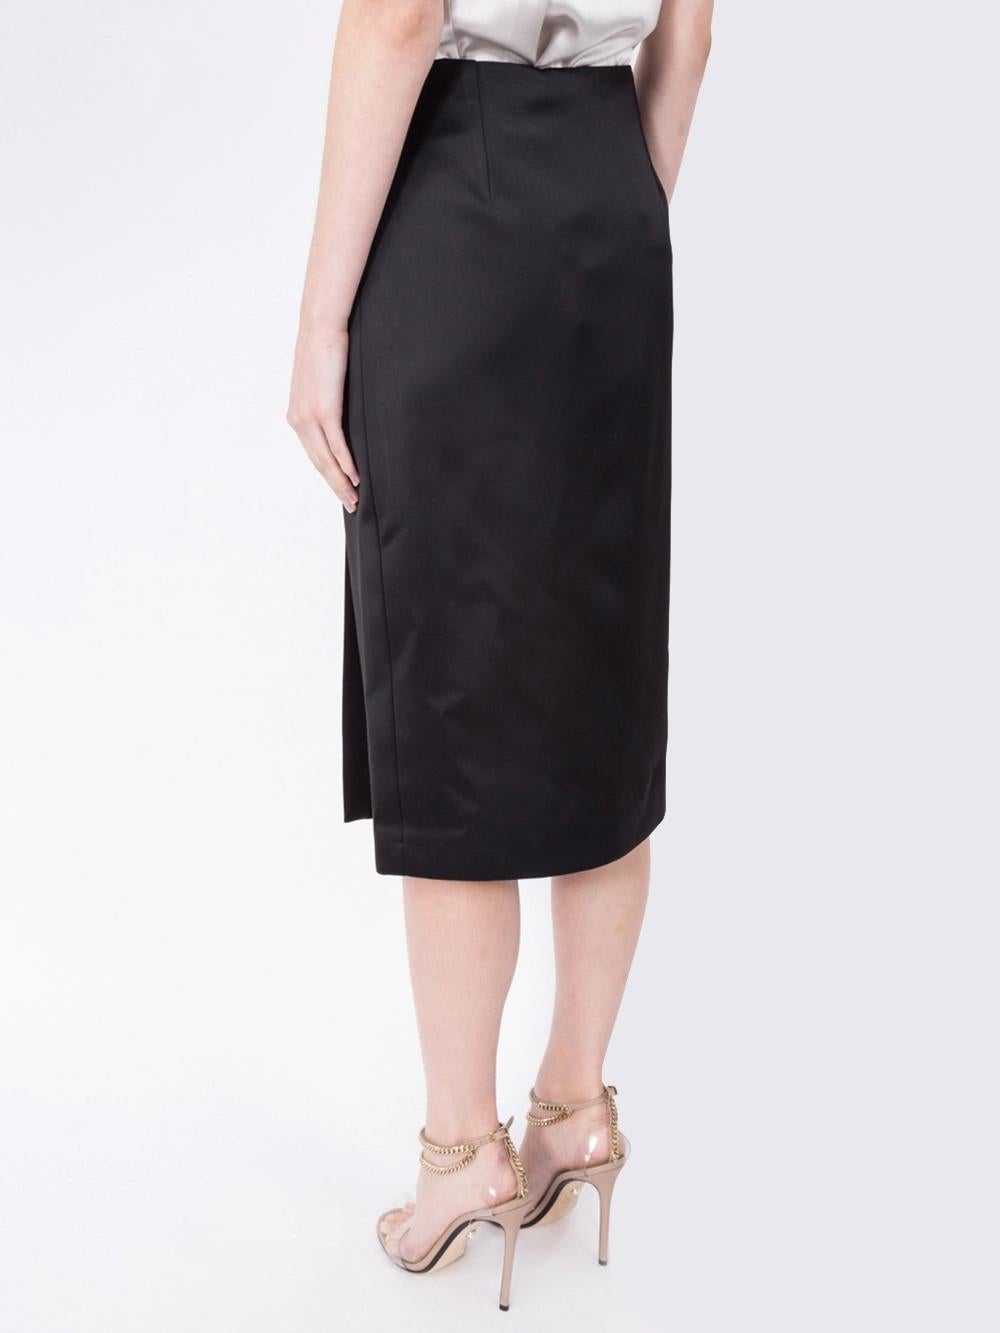 Women's Versace Black Knee Length Pencil Skirt with Gold-Tone Medusa Buttons Size 40